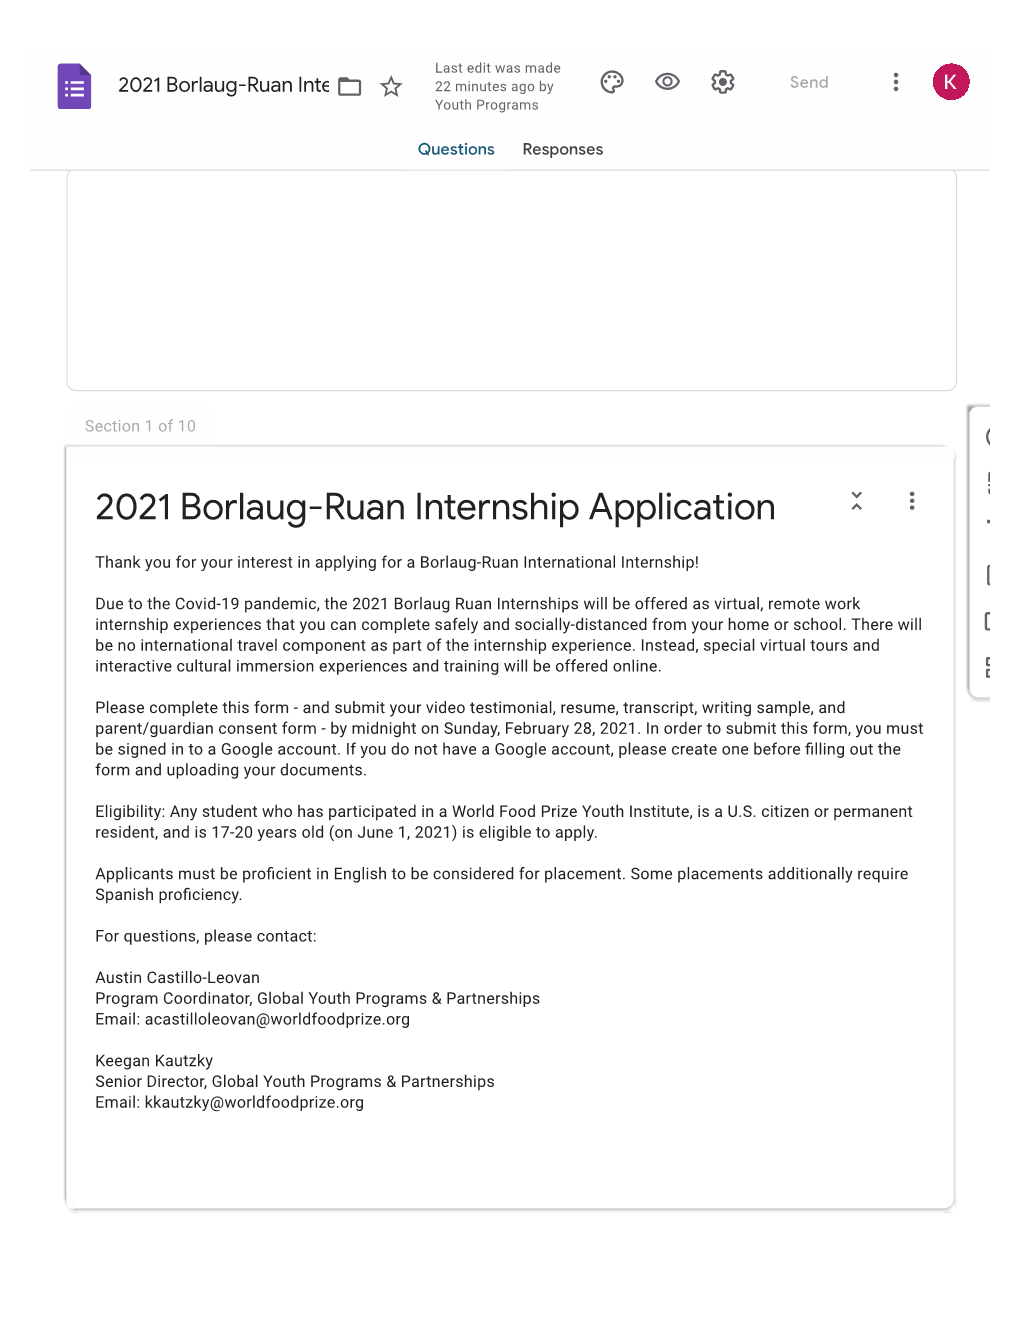 2021 Borlaug-Ruan Internship Application22 Minutes Ago by Send Youth Programs